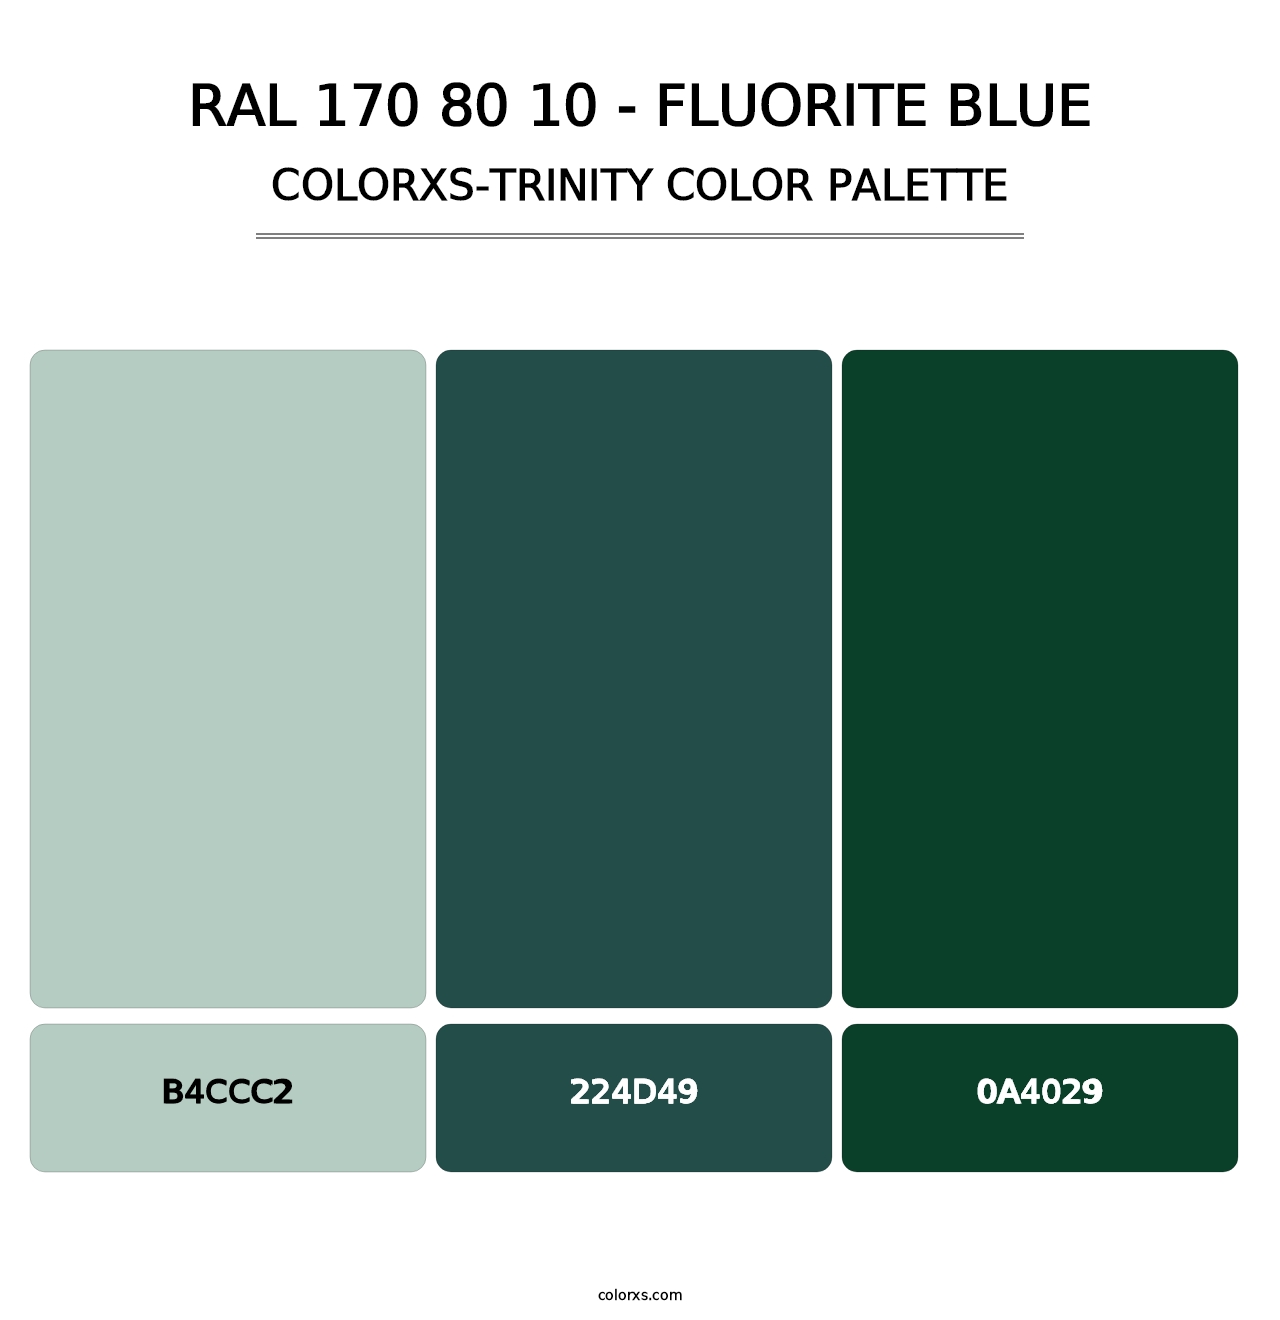 RAL 170 80 10 - Fluorite Blue - Colorxs Trinity Palette